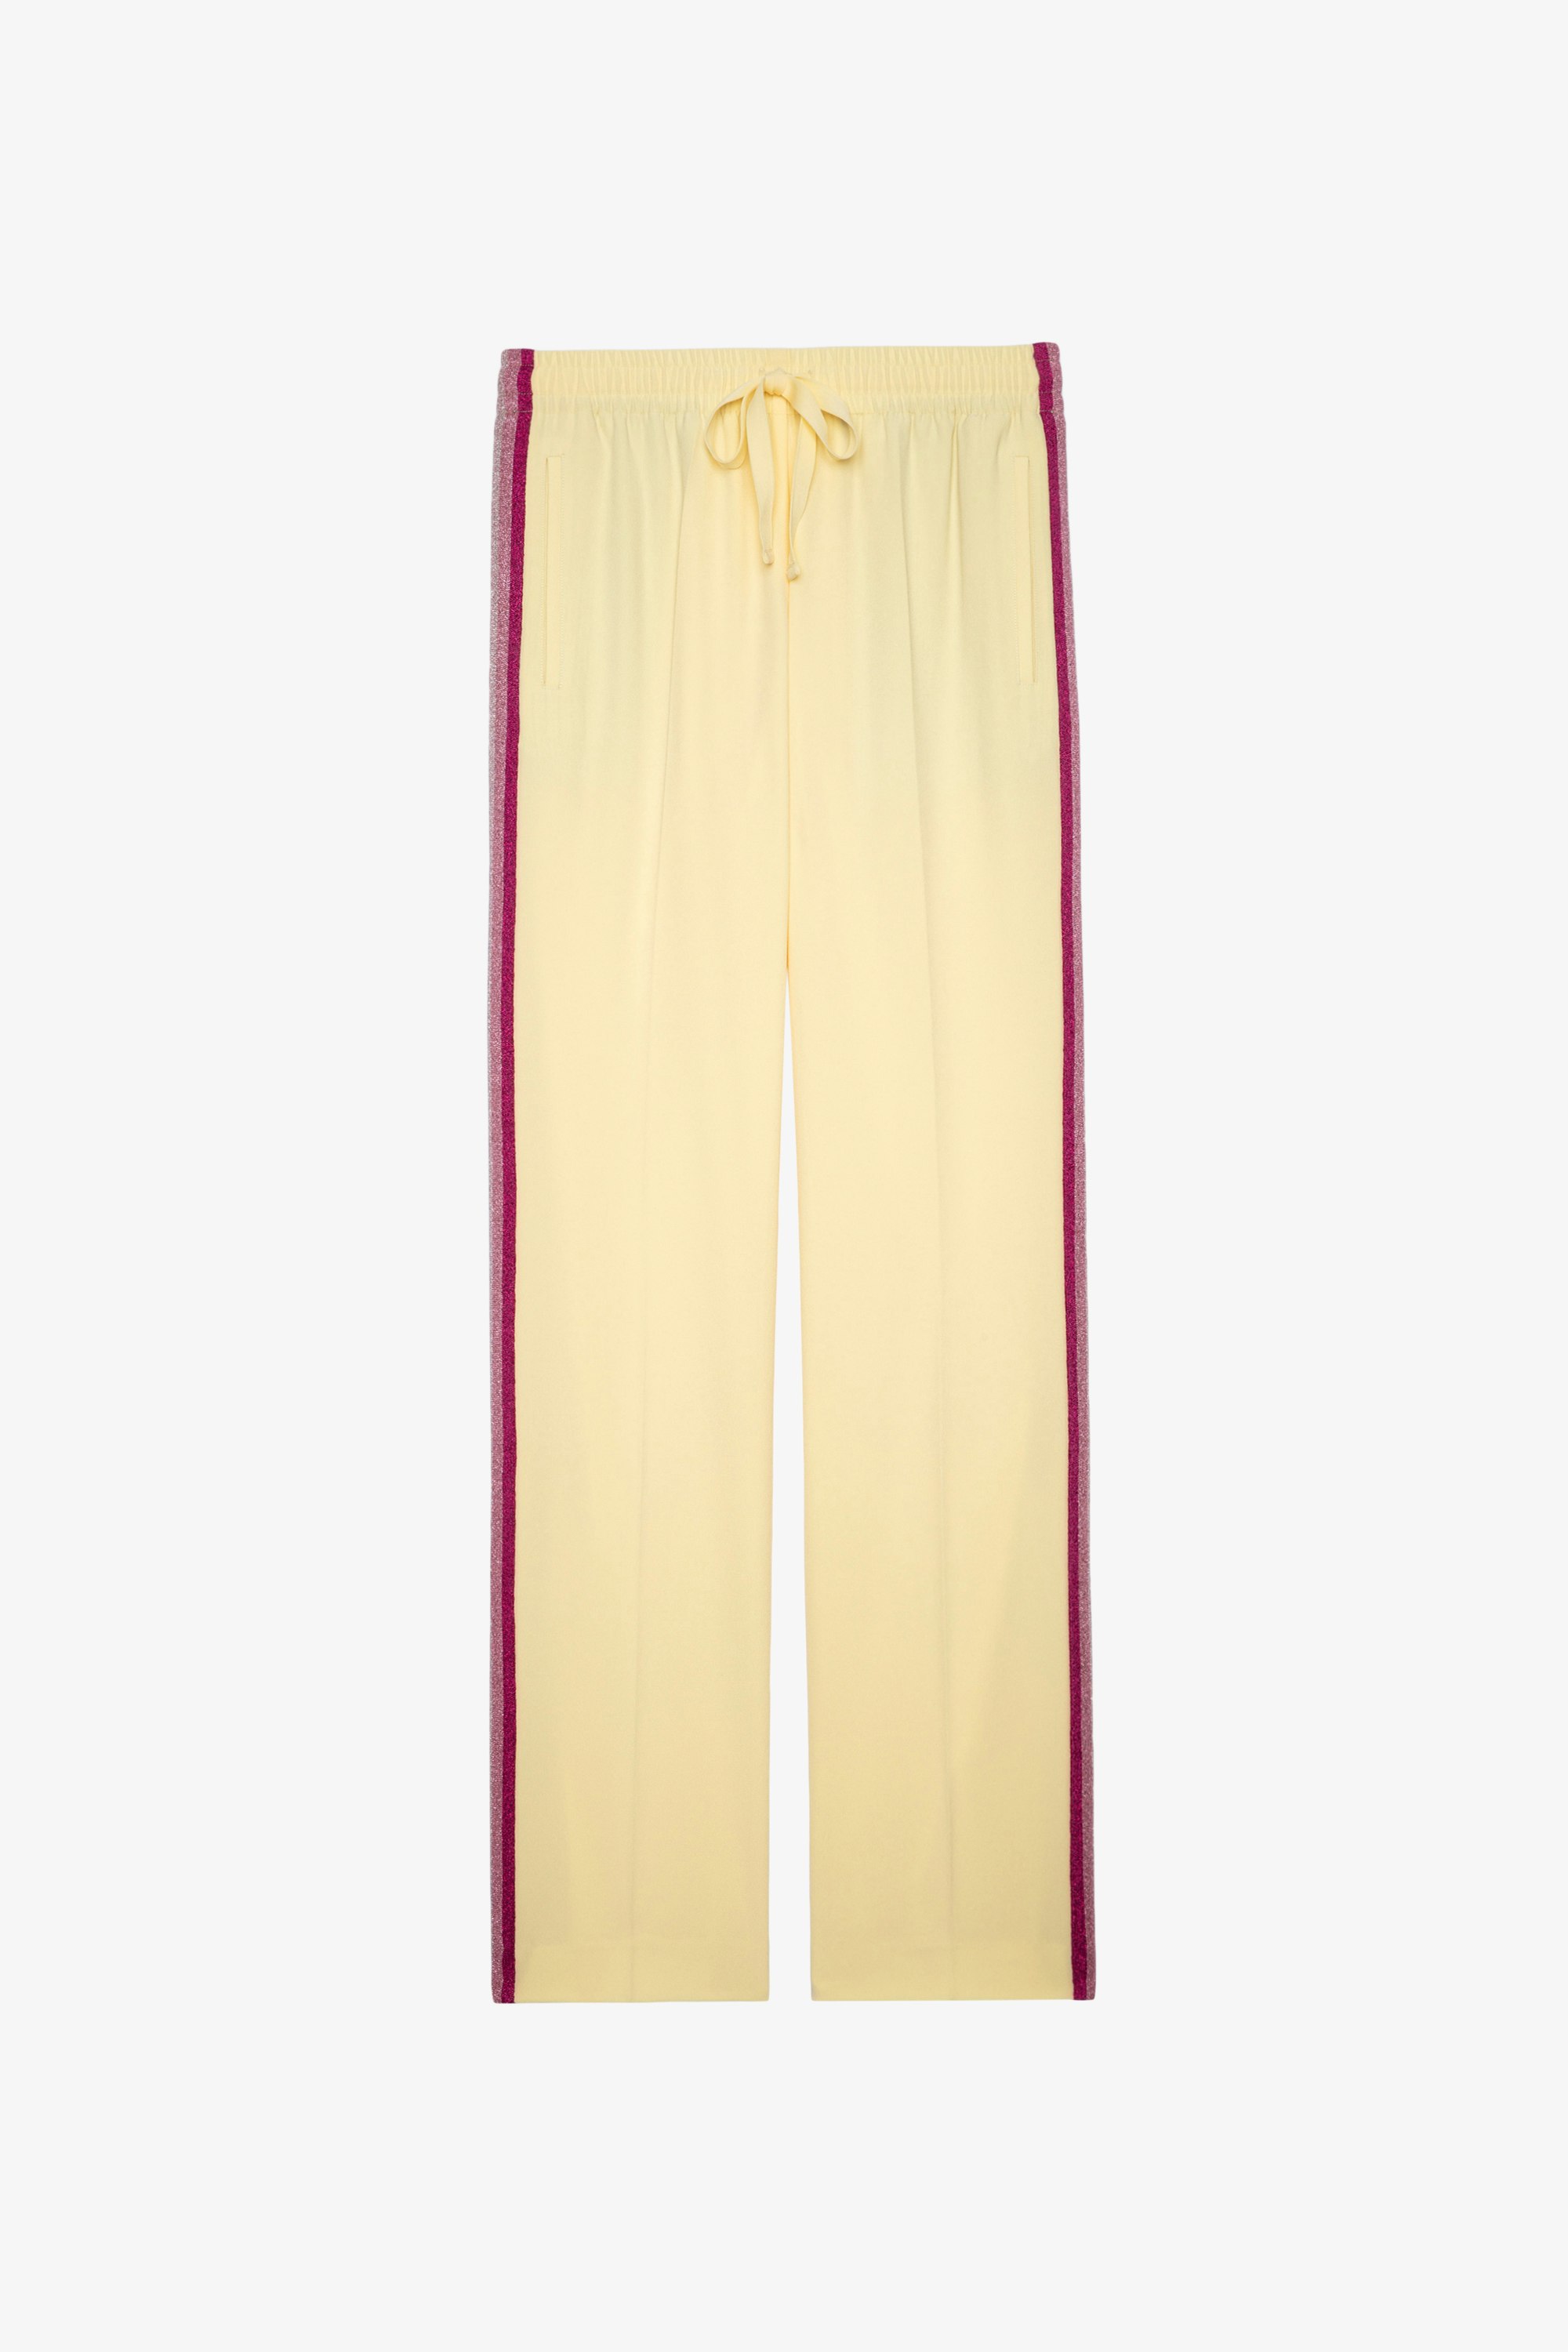 Pantaloni Pomy crepe Pantaloni fluidi gialli con bande laterali glitterate donna